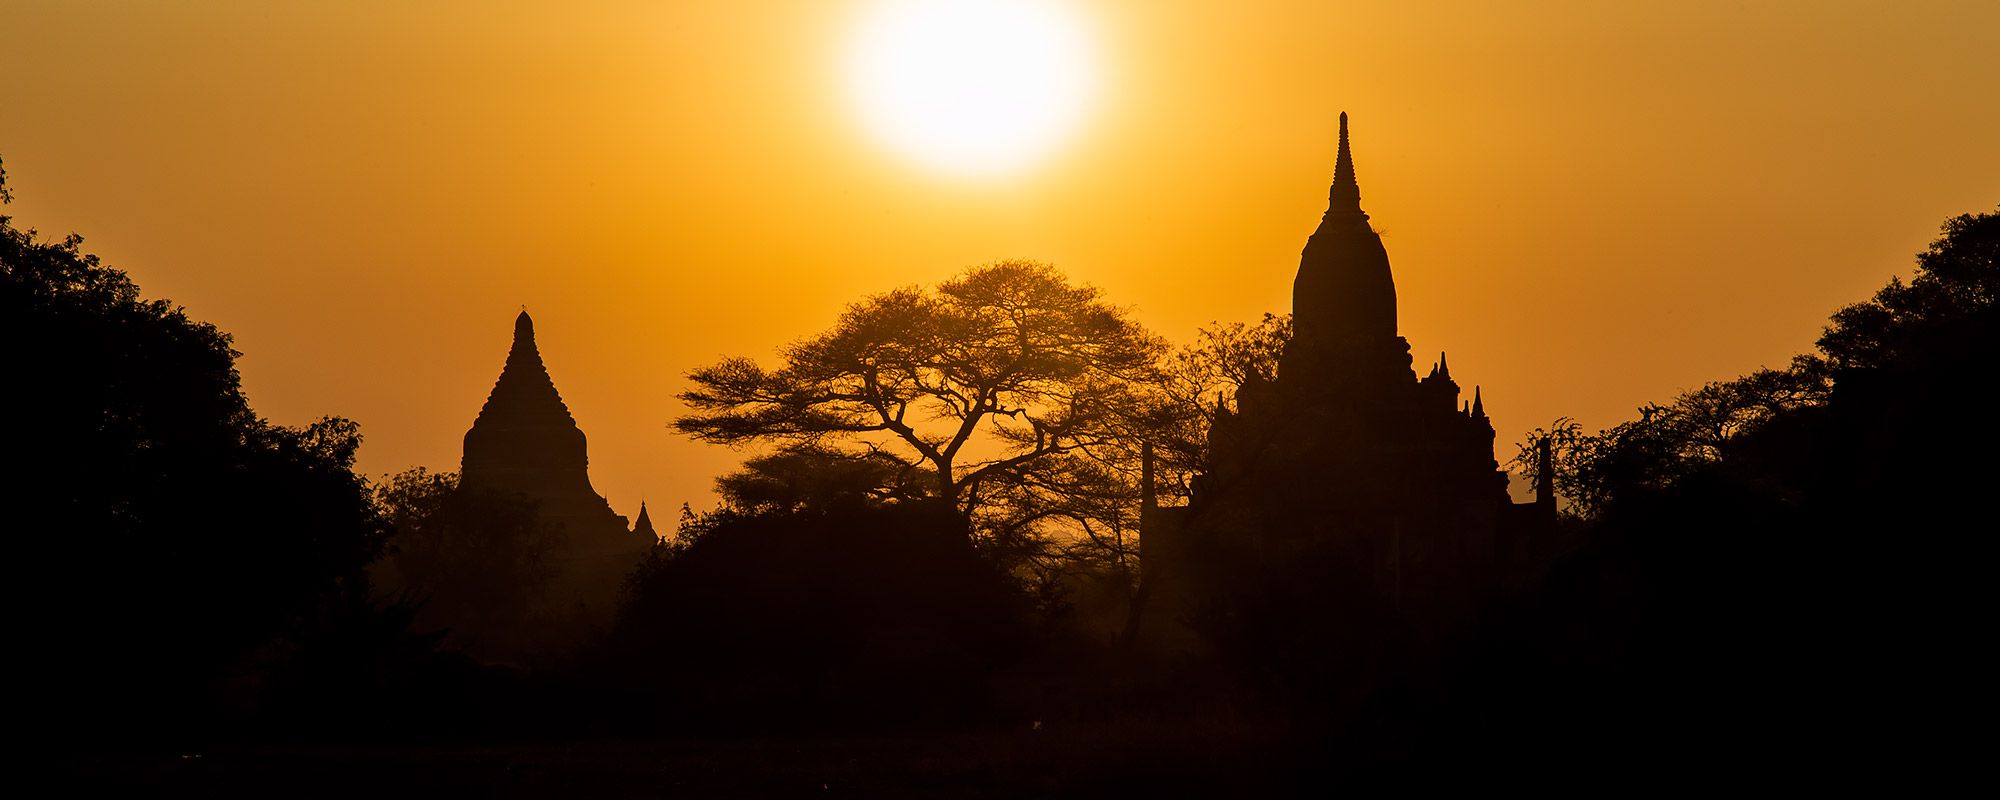 Sonnenuntergang mit Tempel in Bagan